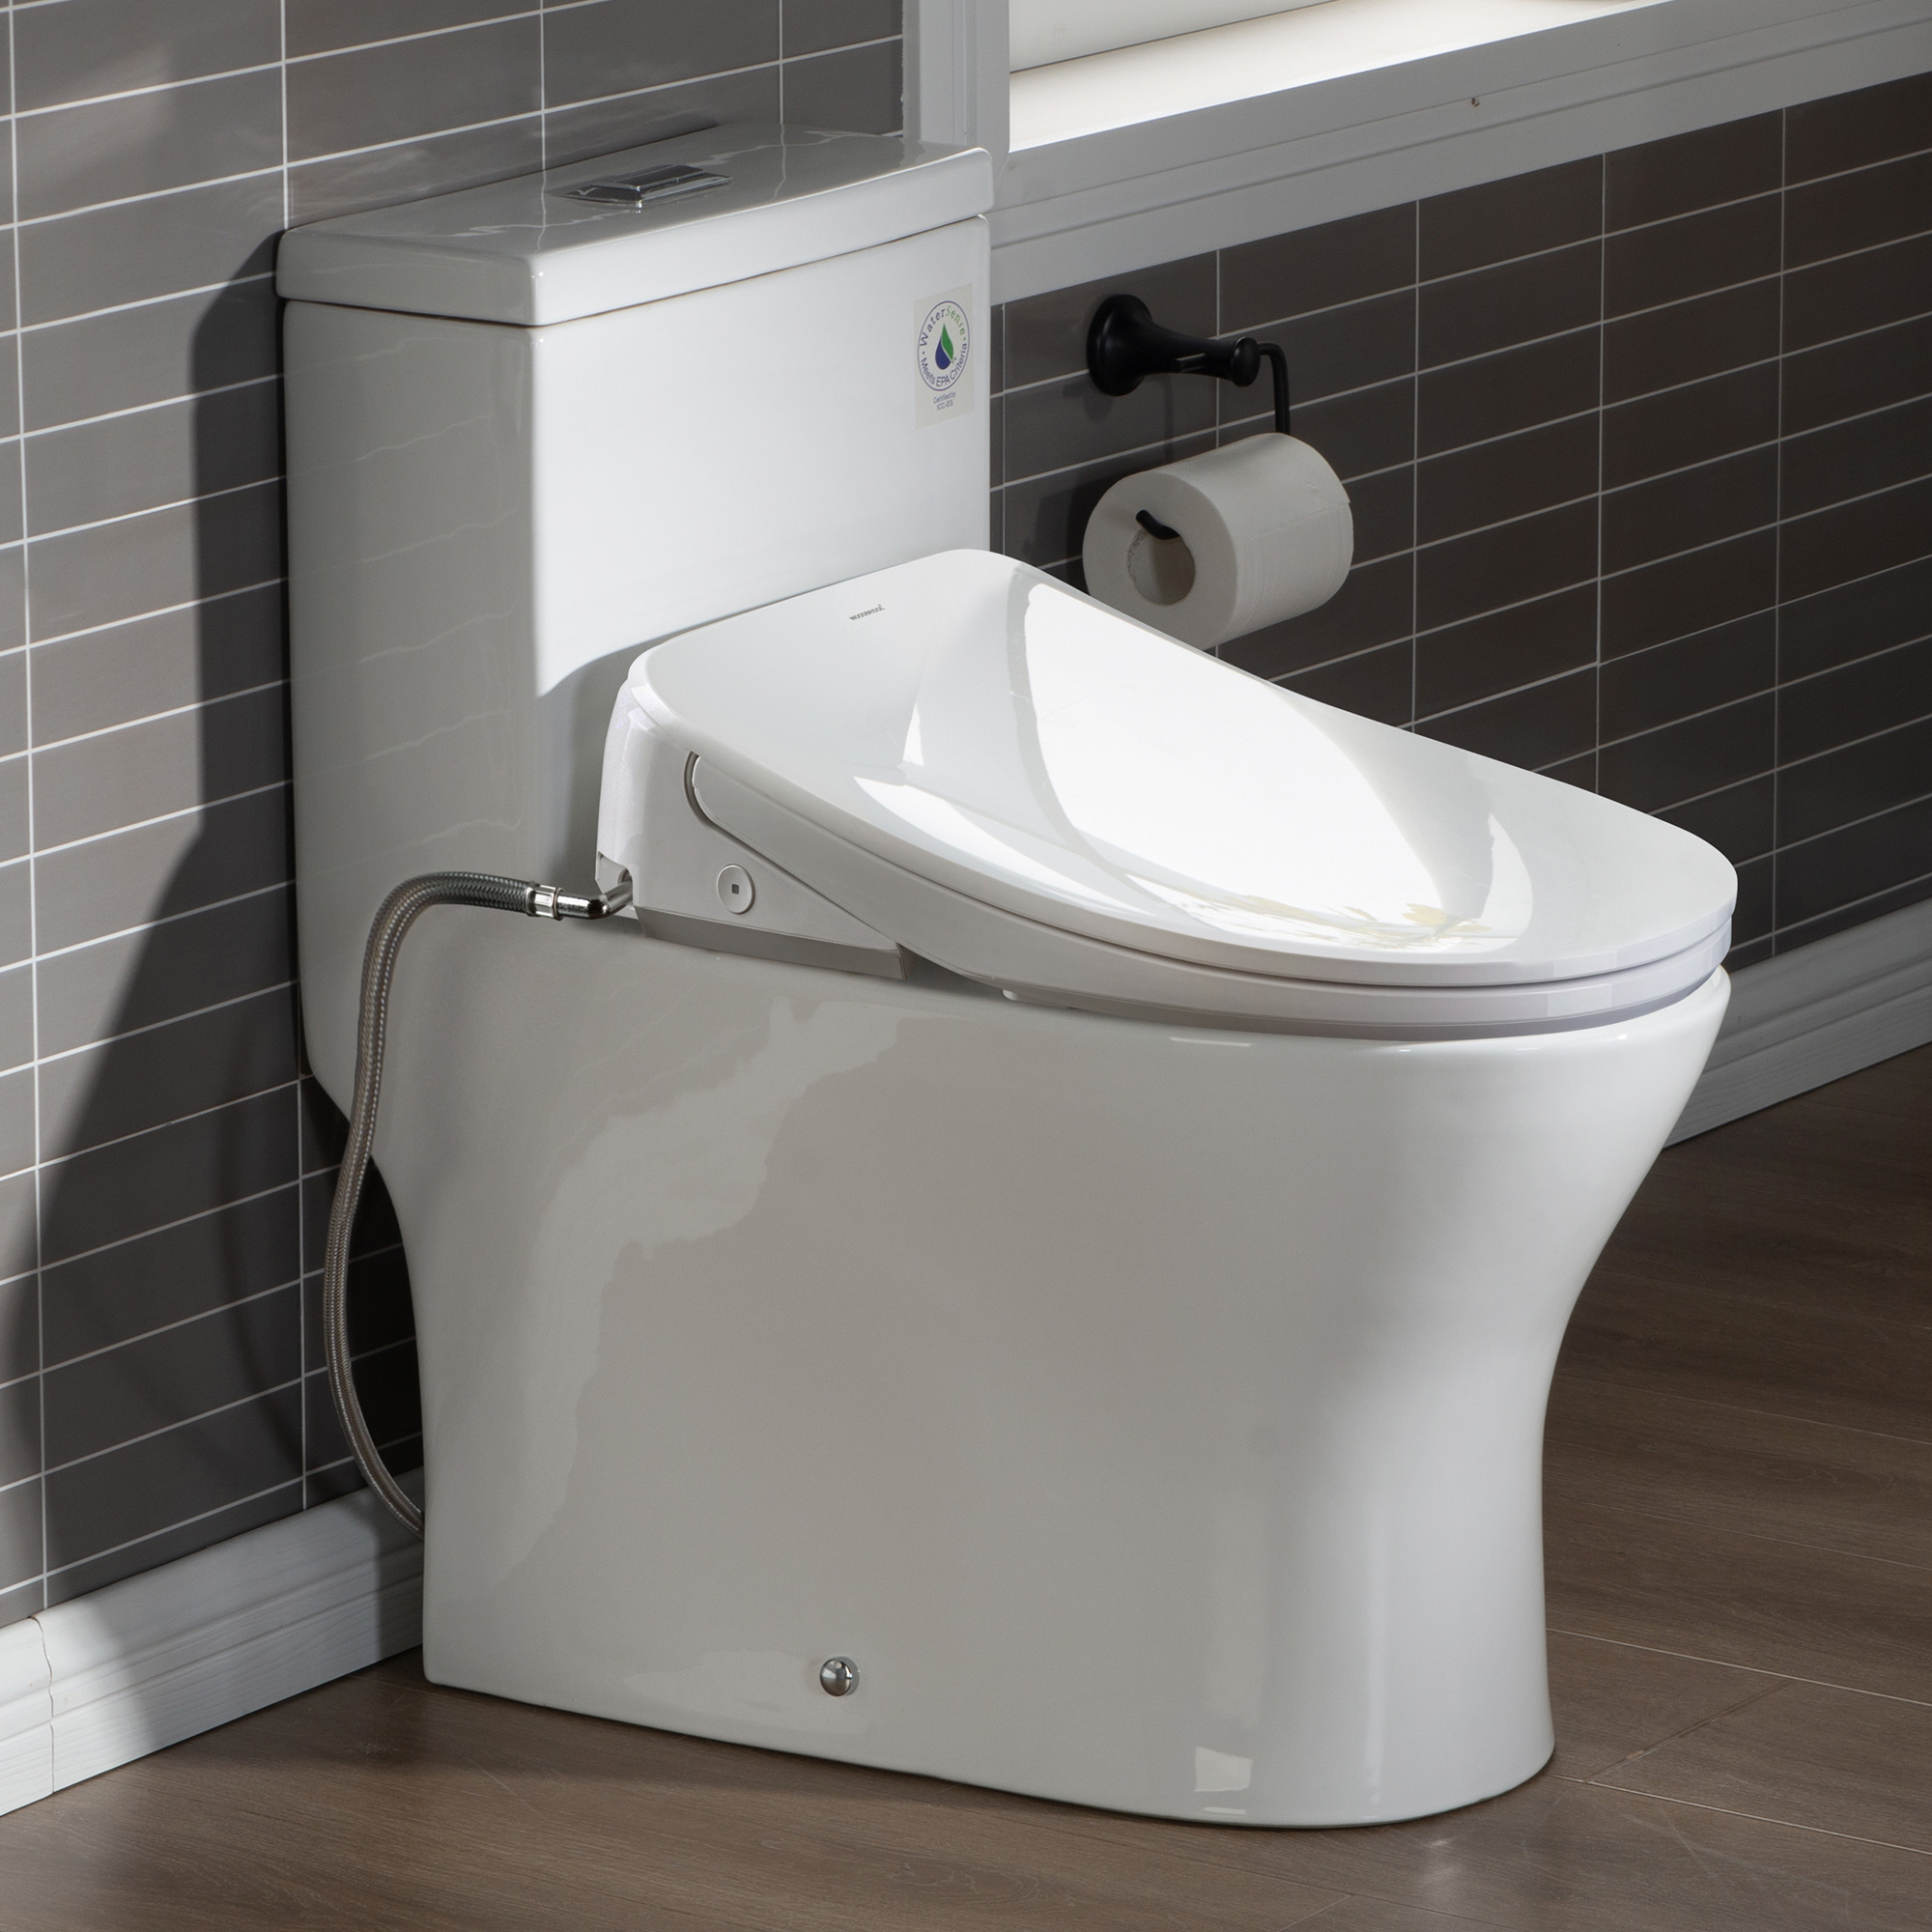  WOODBRIDGE Elongated 1-Piece Toilet with Advanced Auto Open & Close Bidet Smart Toilet Seat, Child Wash, Chair Height, 1000 Gram MaP Flushing Score, 1.28 GPF Dual, Water Sensed_15267